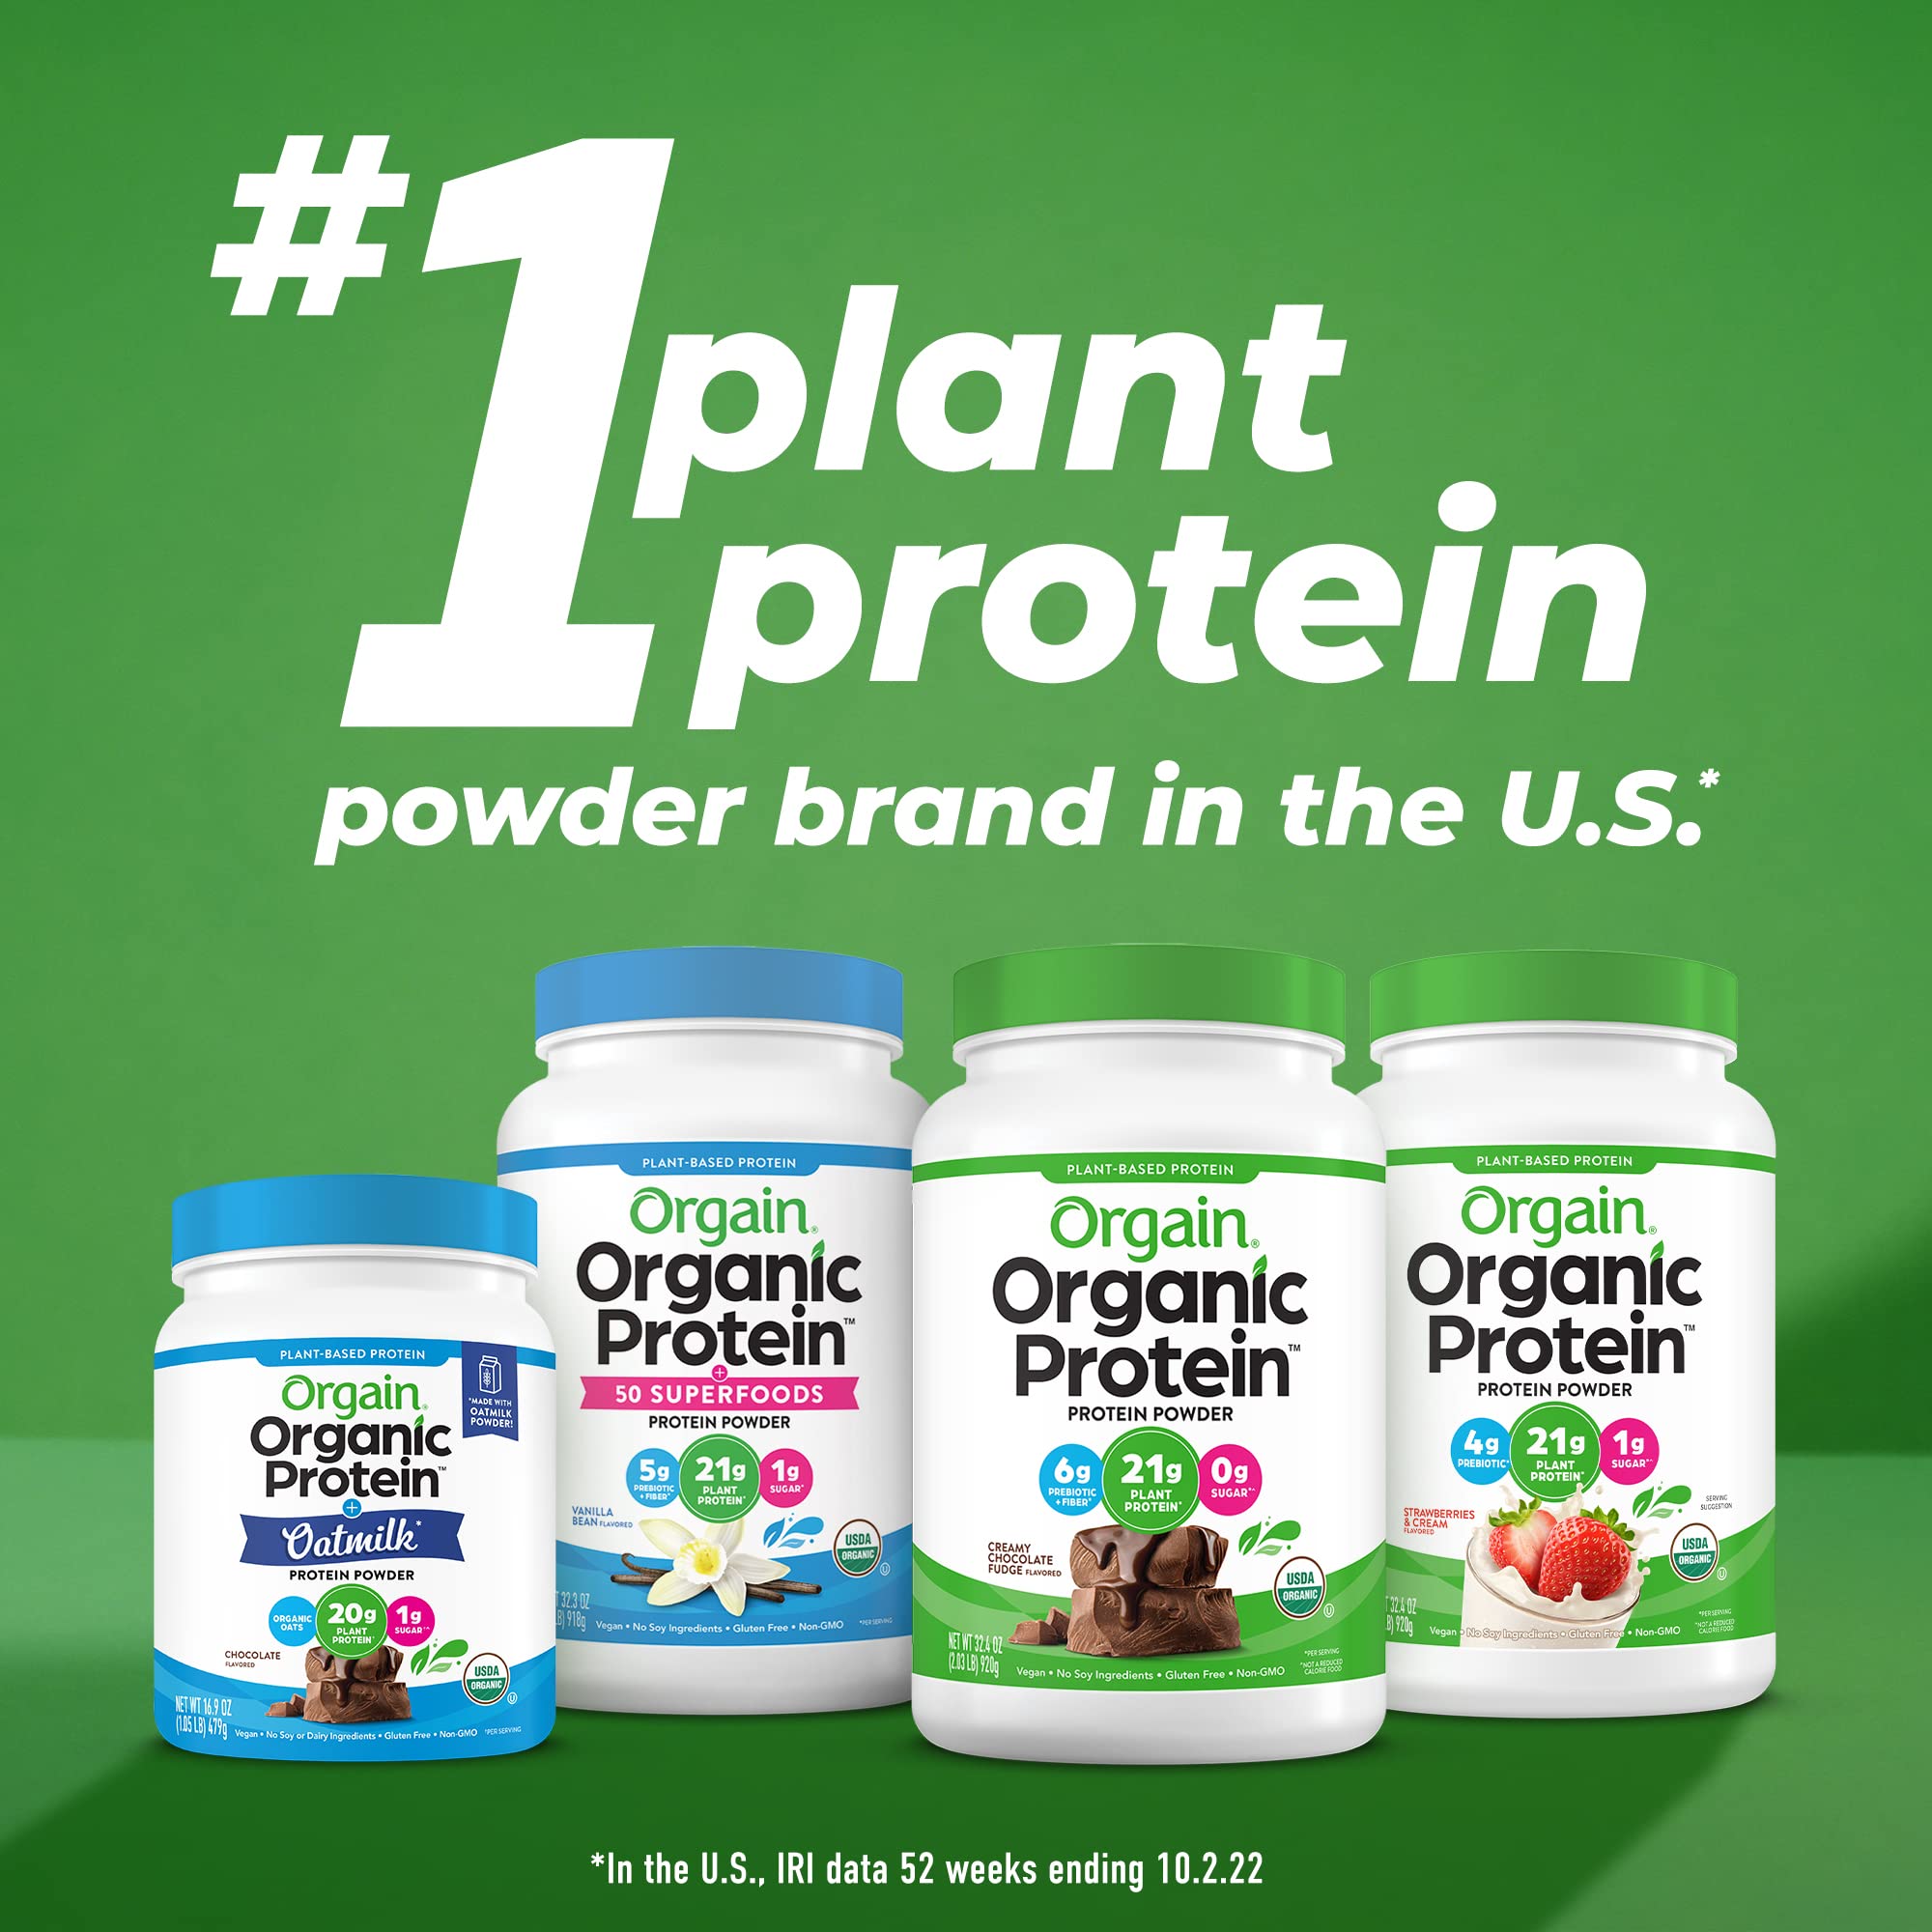 Orgain Organic Greens Powder + 50 Superfoods, Original - 1 Billion Probiotics for Gut Health, Antioxidants, Vegan, Plant Based, Gluten Free, Non GMO, Dairy Free Juice & Smoothie Mix - 0.62lb